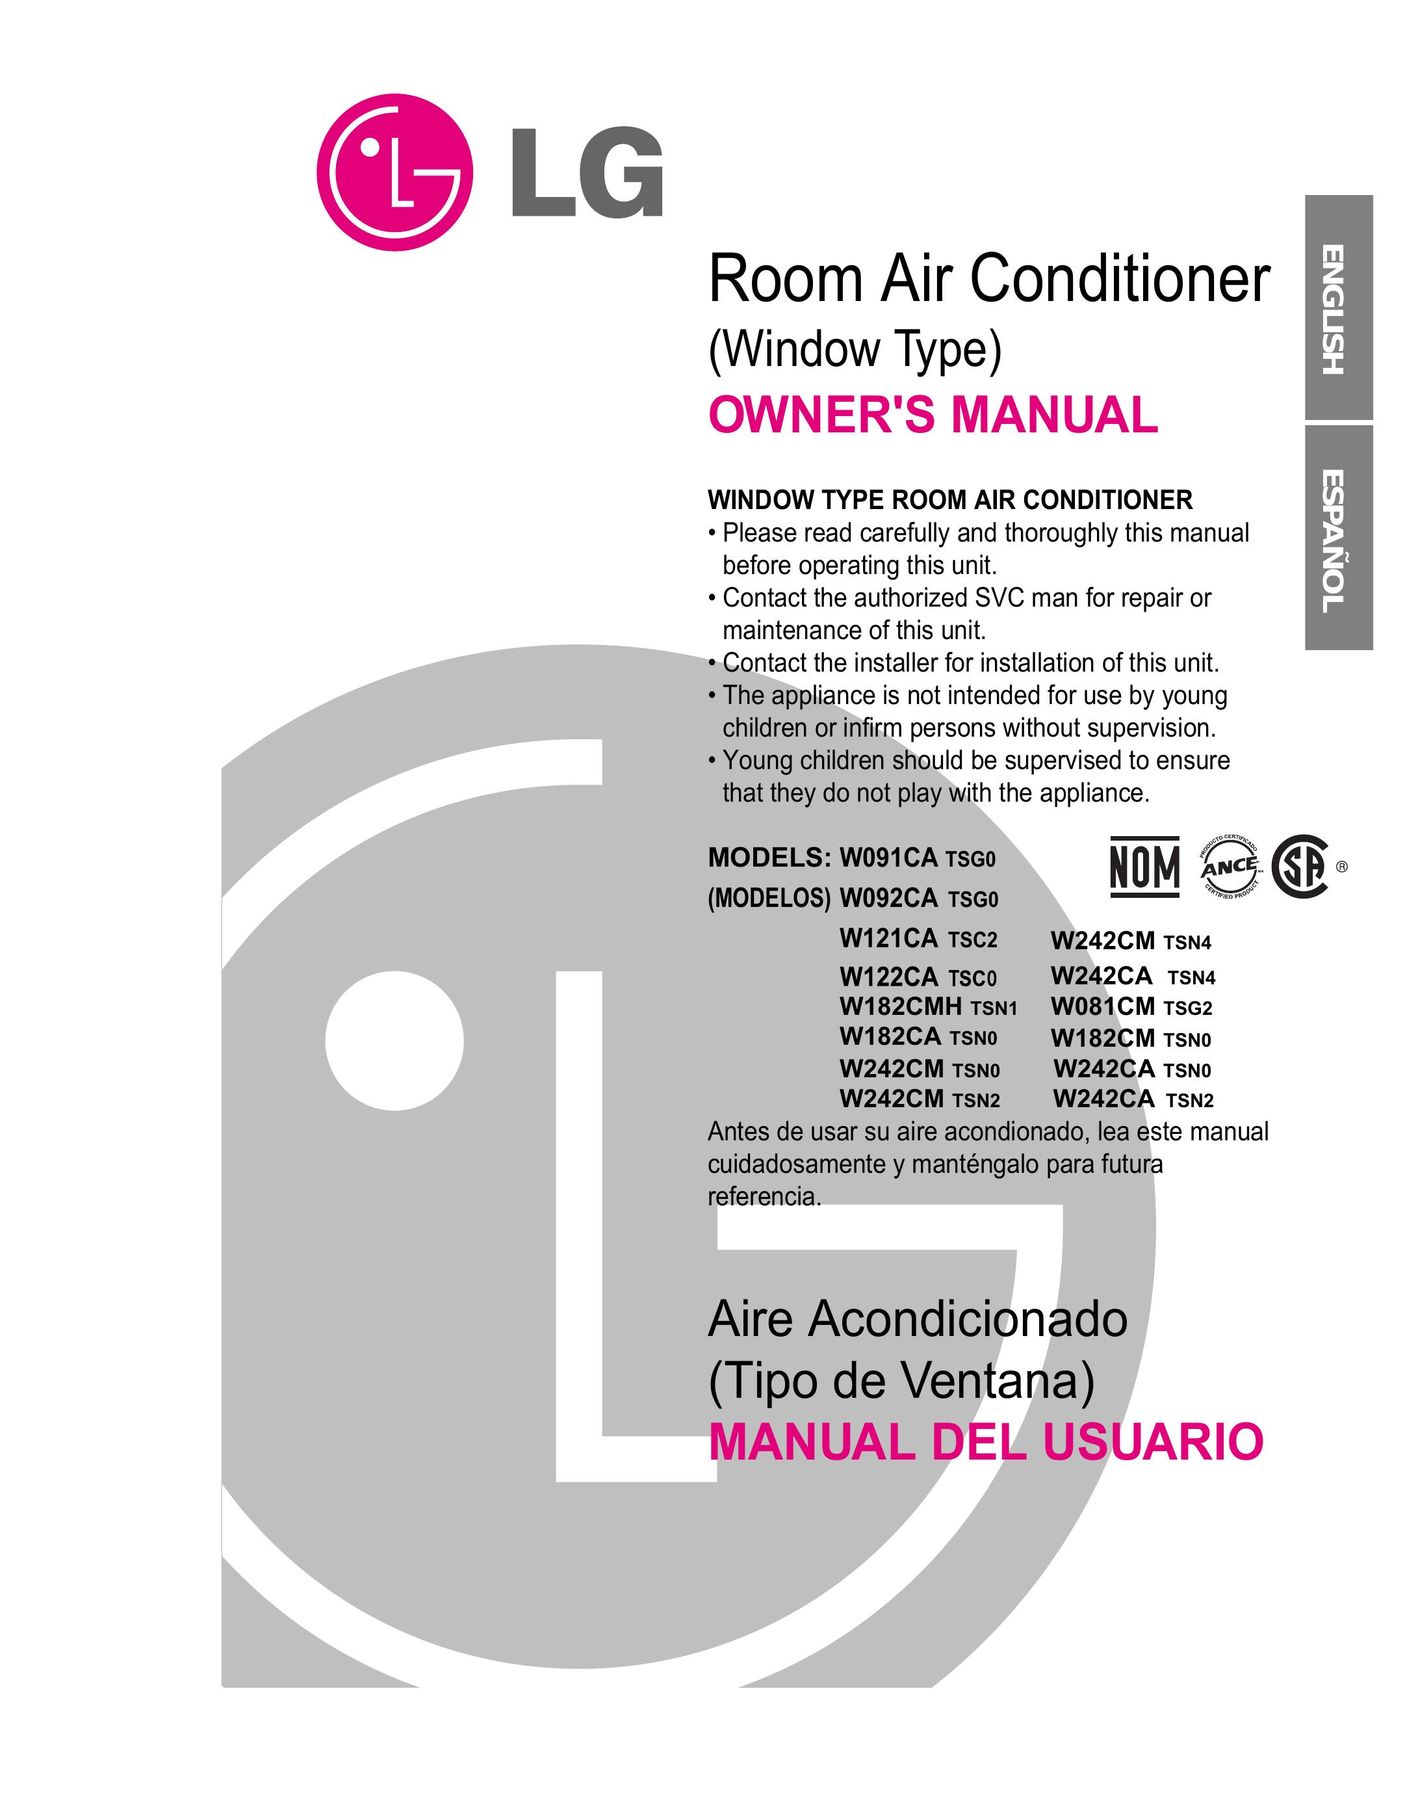 Minolta W091CA TSG0 Air Conditioner User Manual